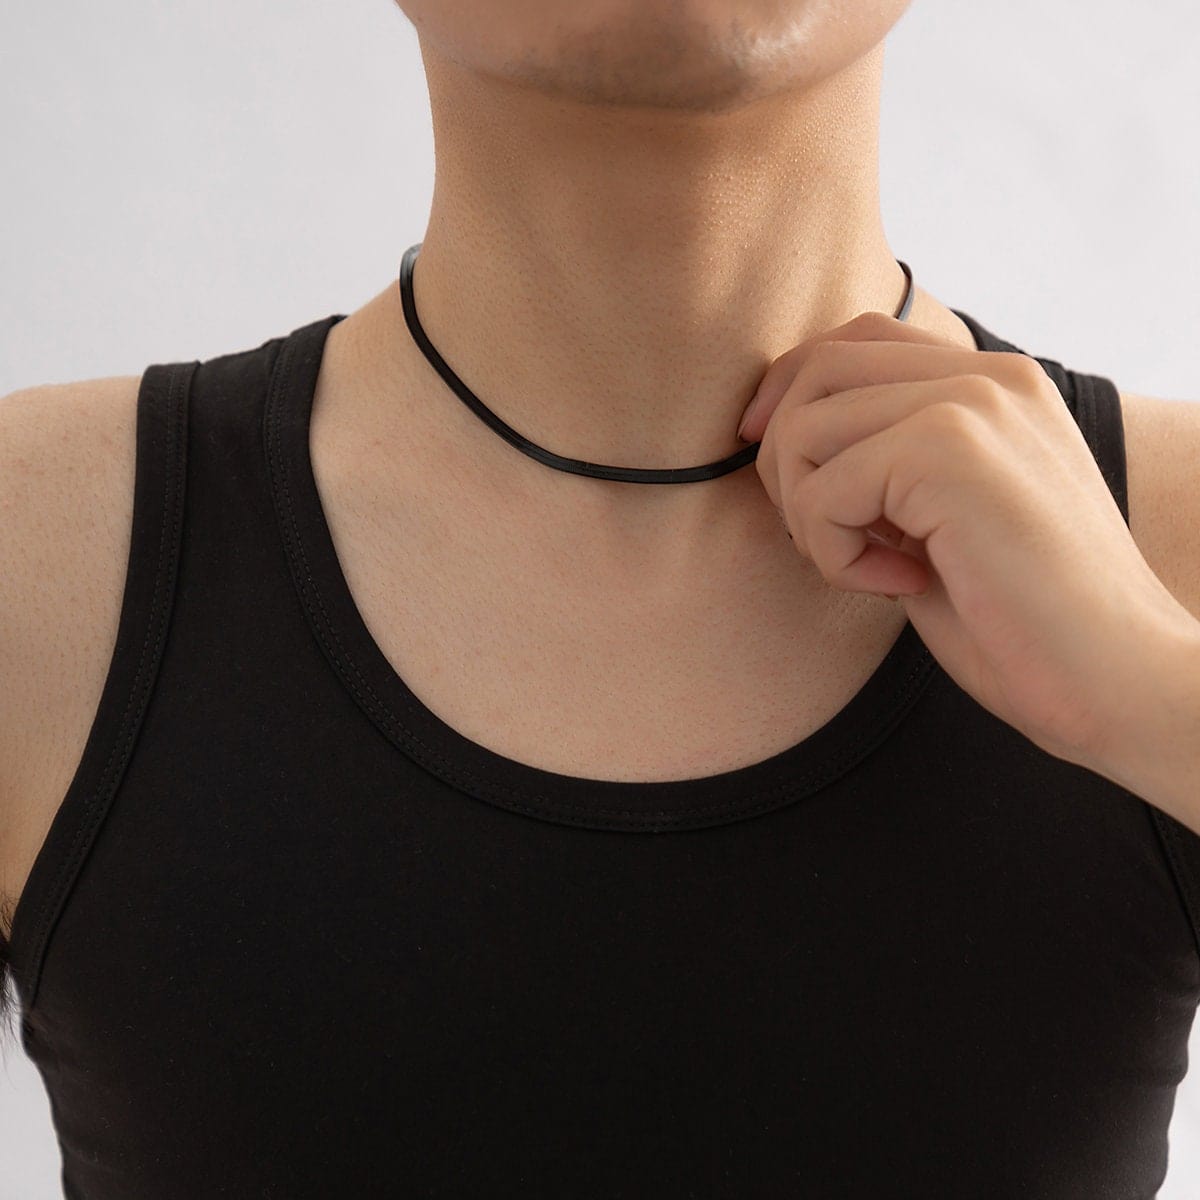 1pc Minimalist Black Line Design Personality Choker Necklace